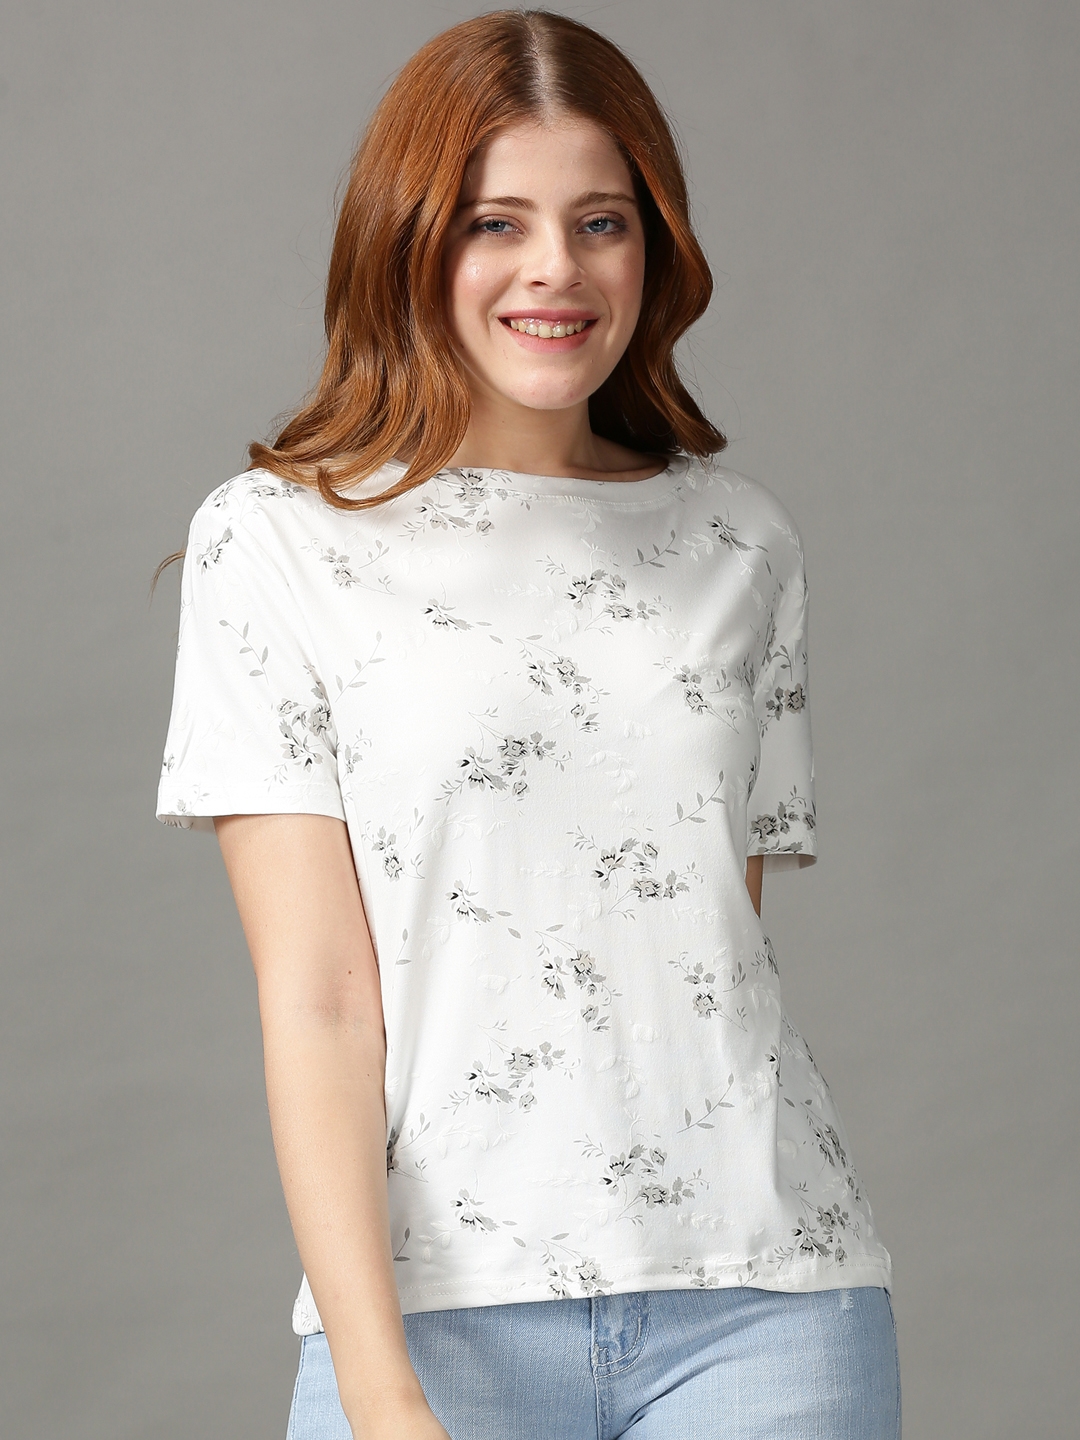 Women's White Cotton Blend Printed Tops